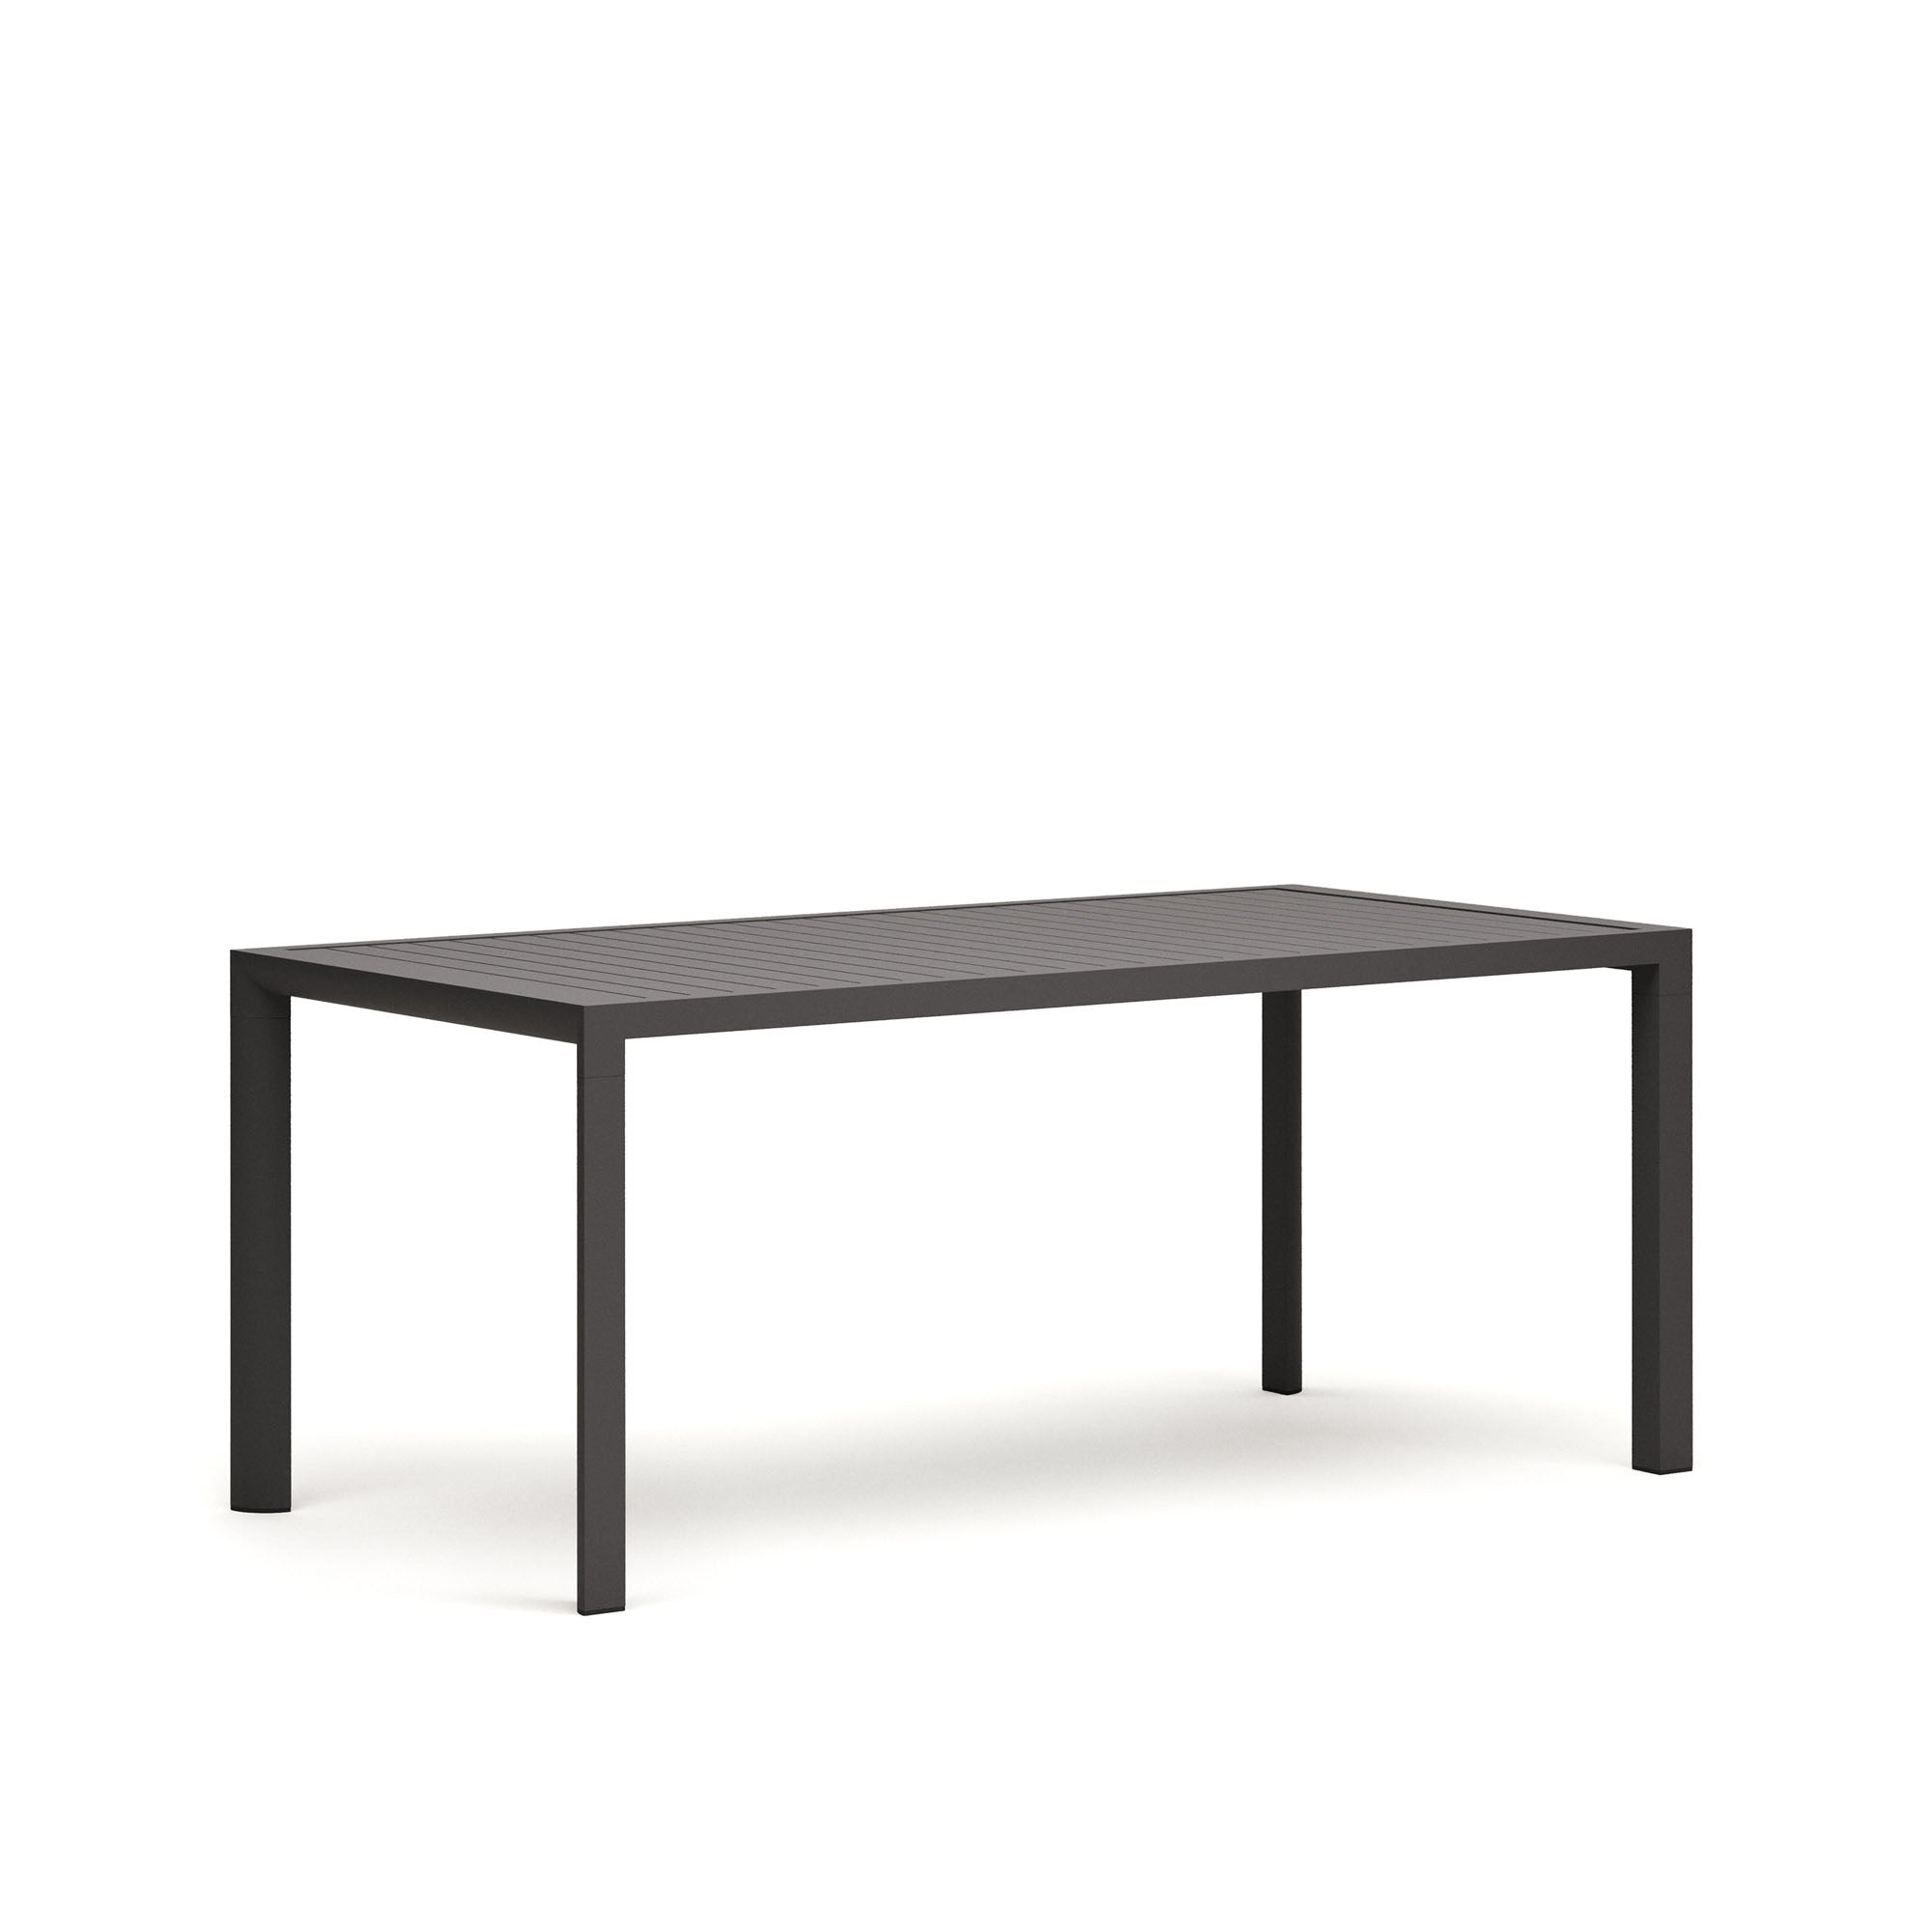 Culip aluminium outdoor table in powder coated grey finish, 180 x 90 cm